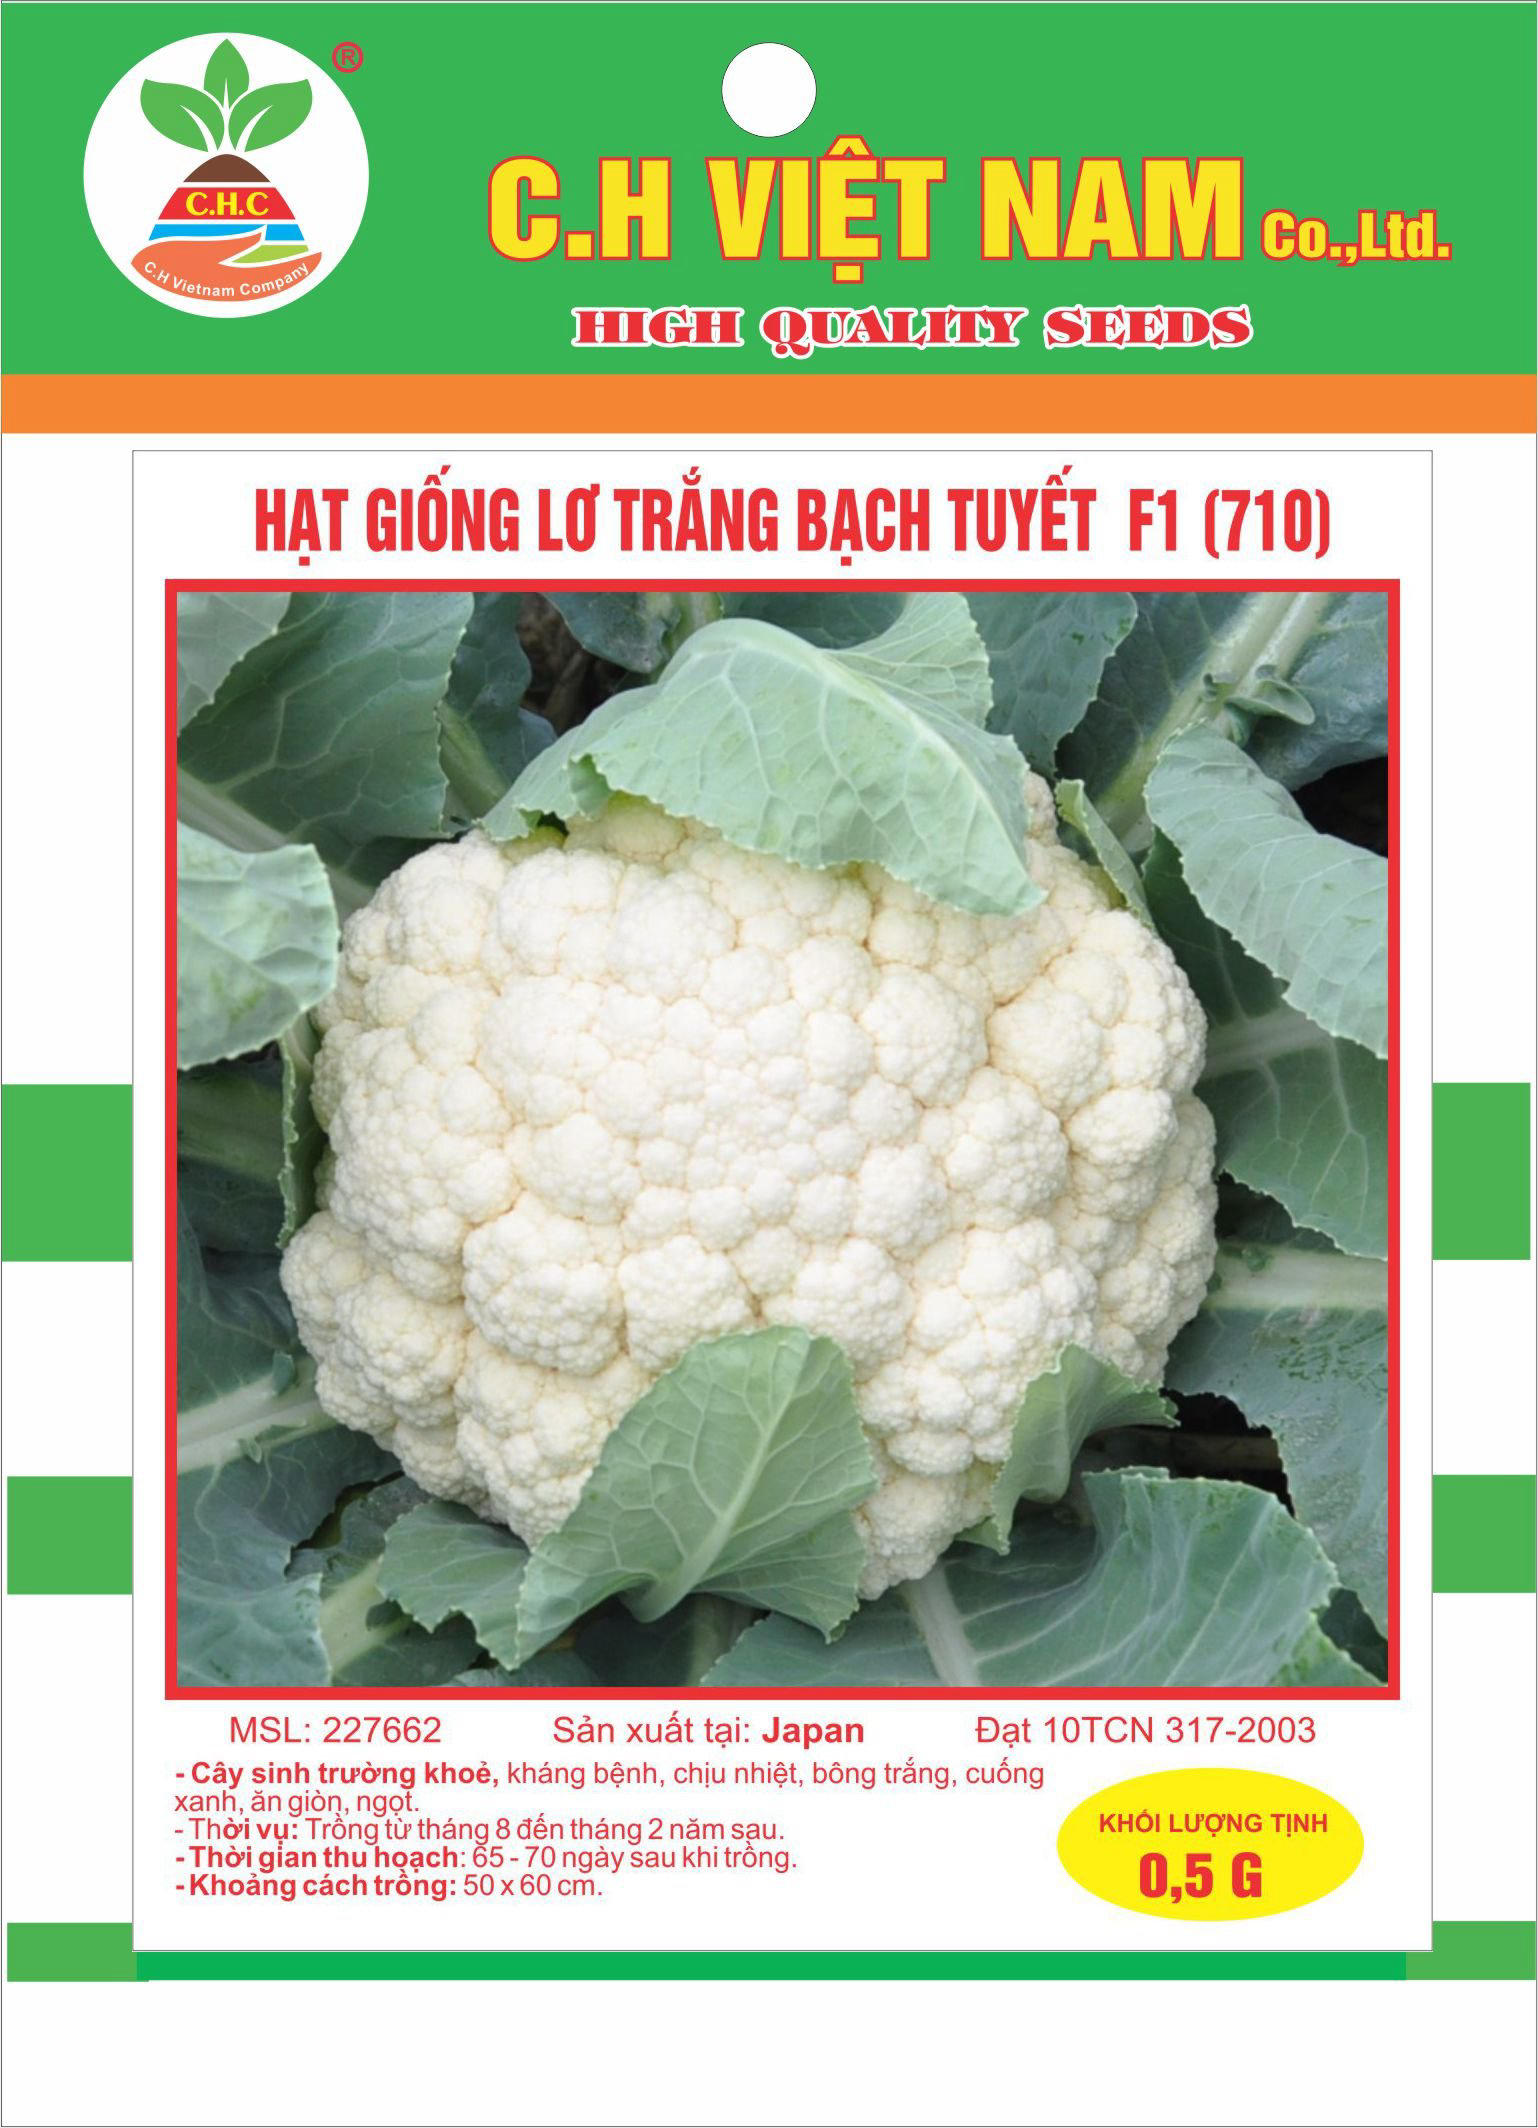 Snow white cauliflower seeds F1 />
                                                 		<script>
                                                            var modal = document.getElementById(